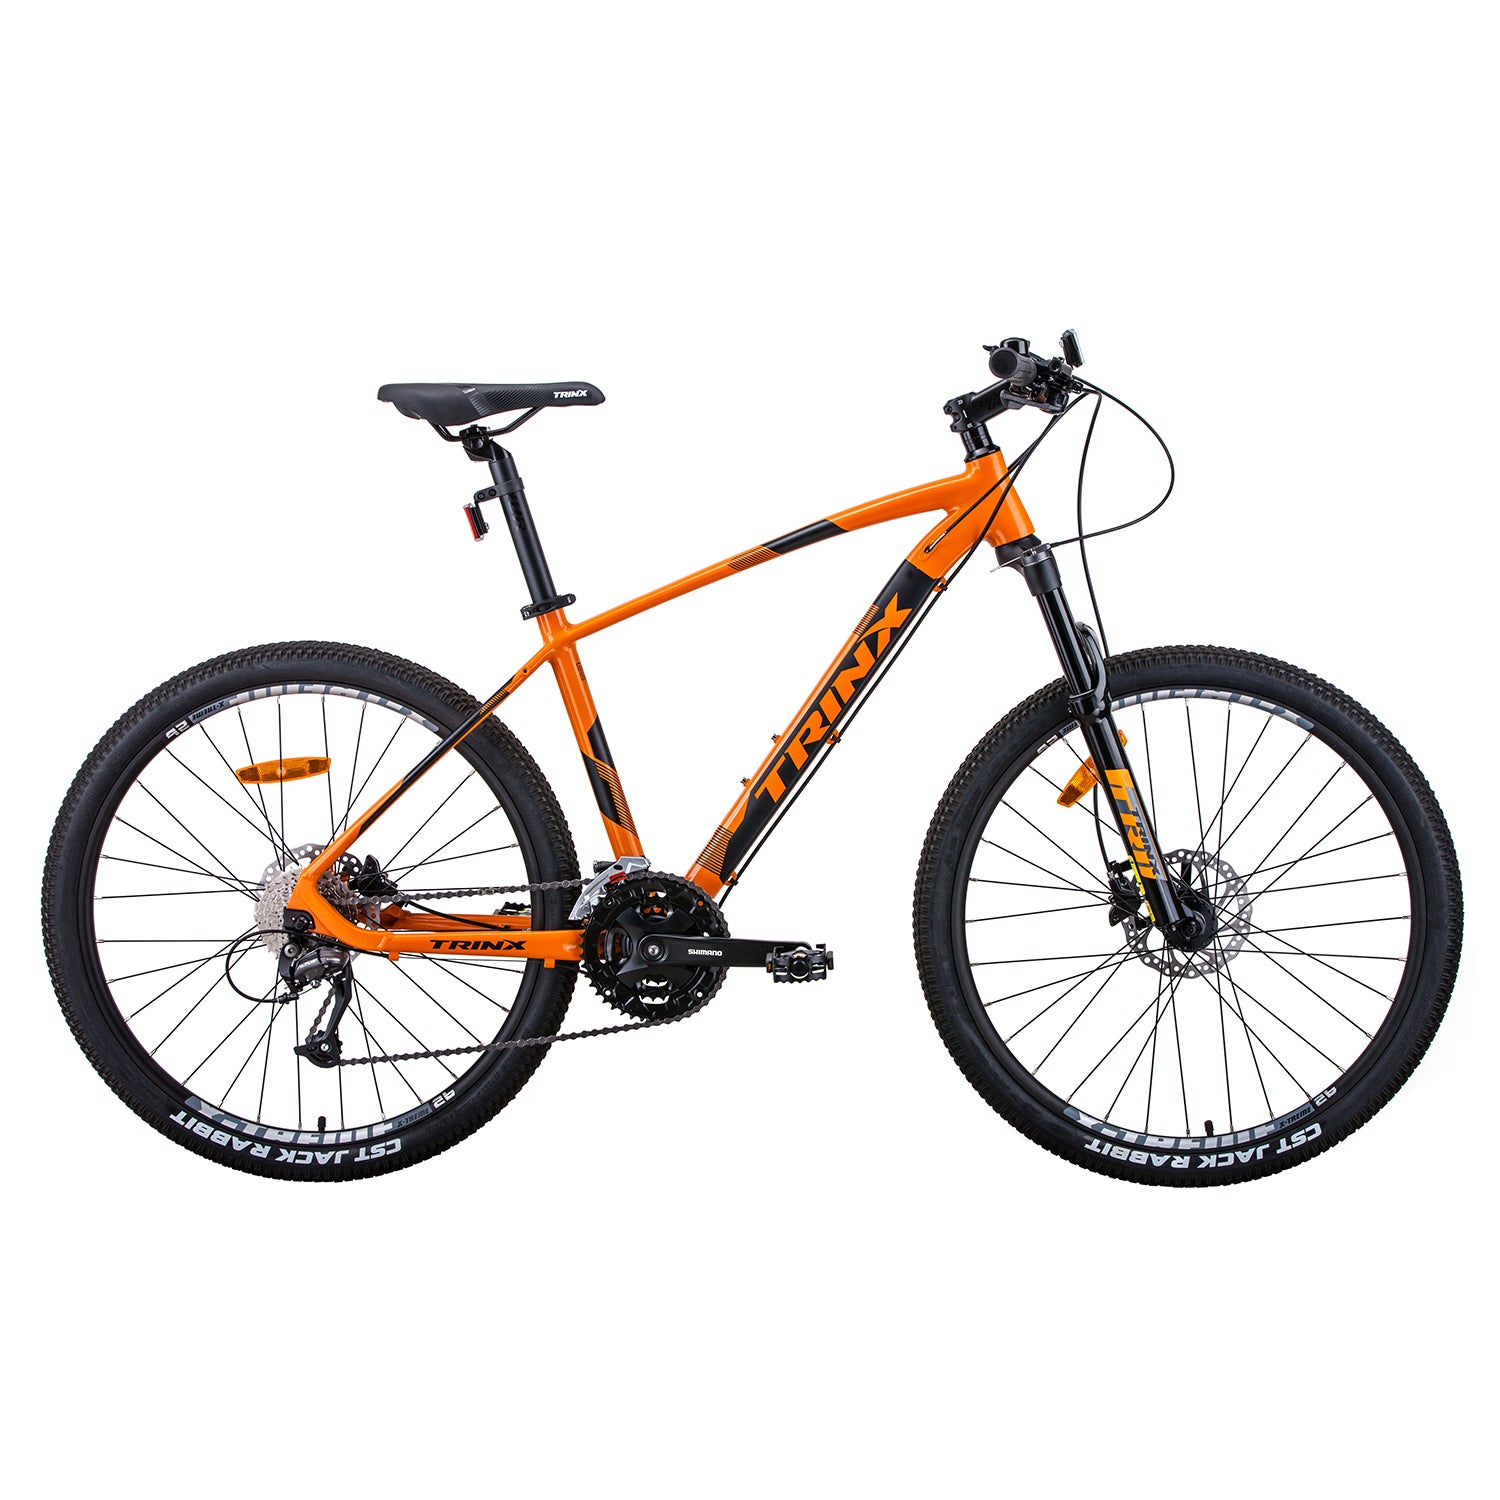 Trinx X1 MTB Mountain Bike Shimano Altus M370 27 Speed 19 Inches Frame Orange/Black